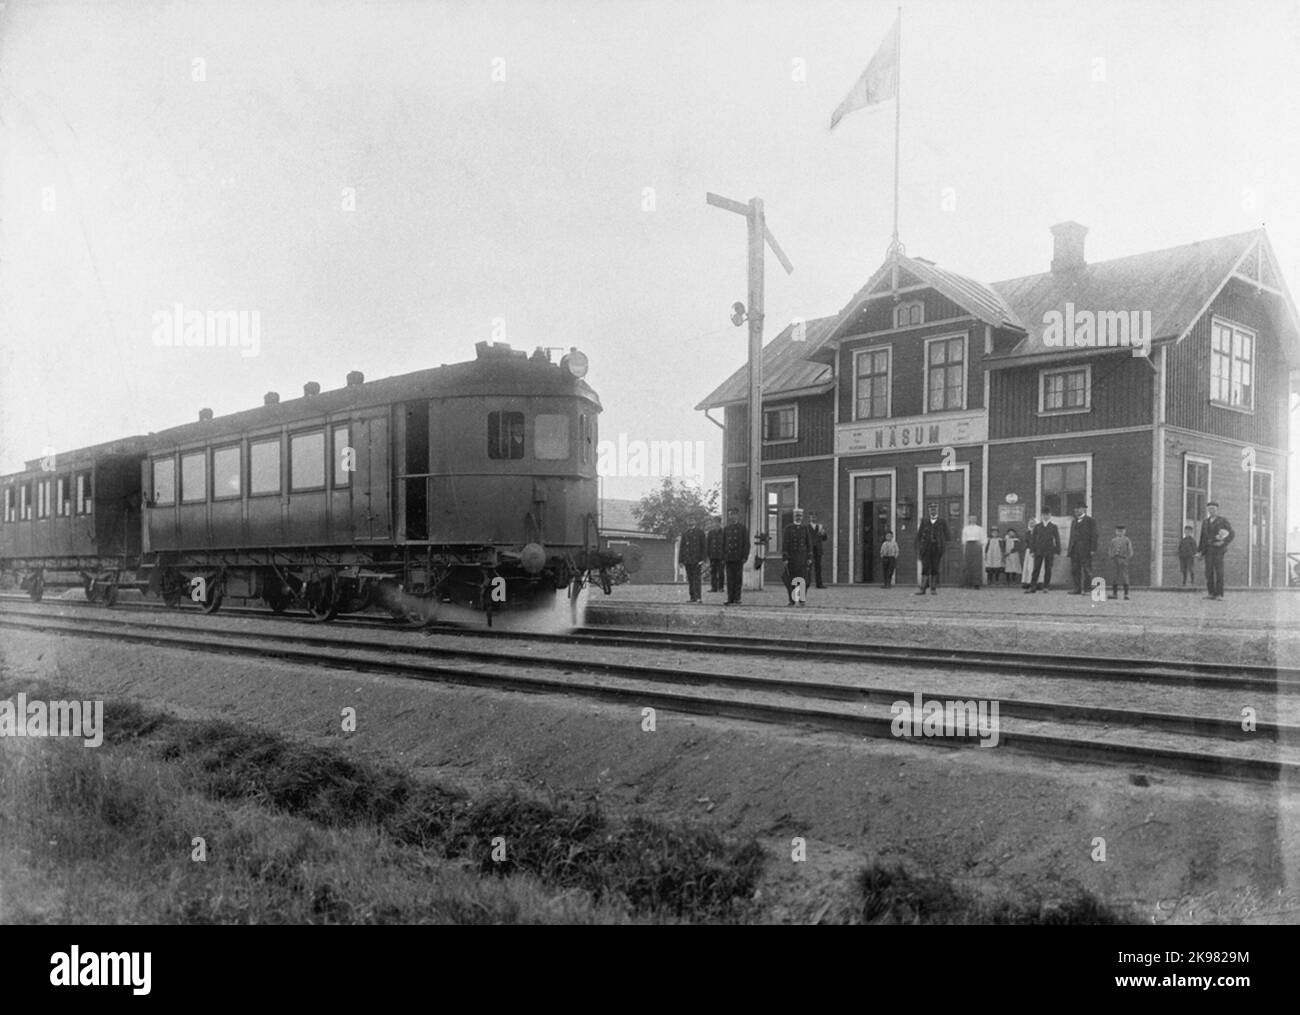 Näsum Stationoej 1ångv. Arlöf 1907. Stock Photo